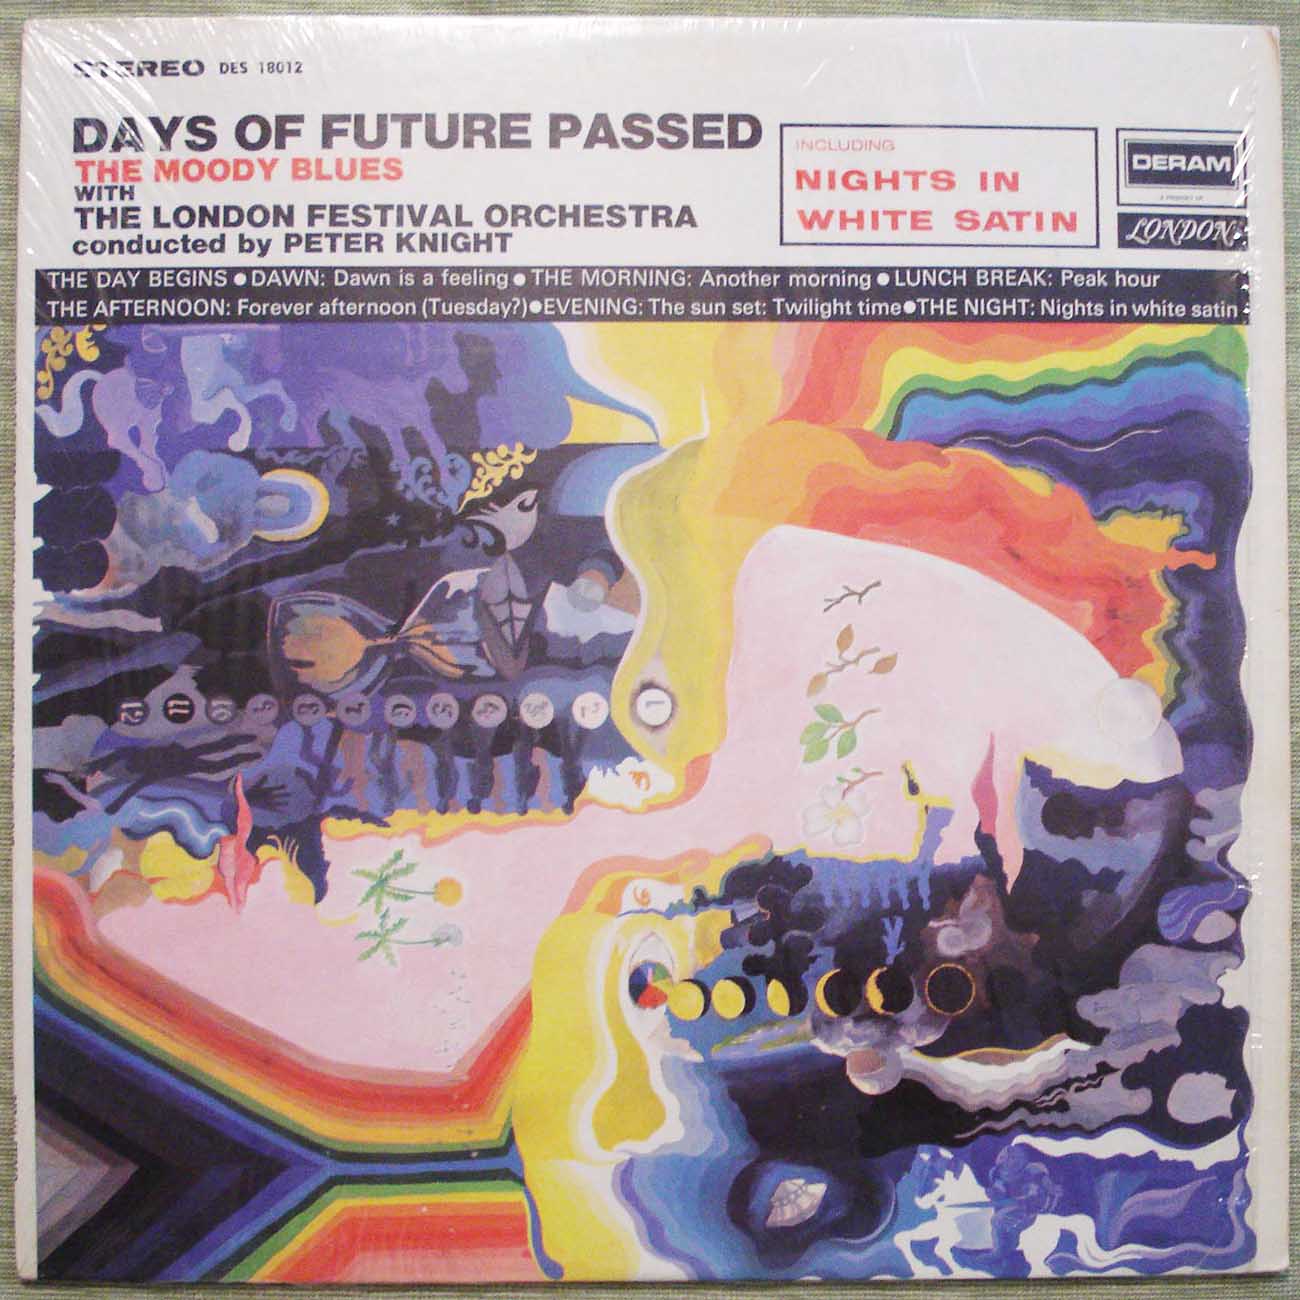 The Moody Blues - Days of Future Passed (1967) Vinyl LP 33rpm DES18012